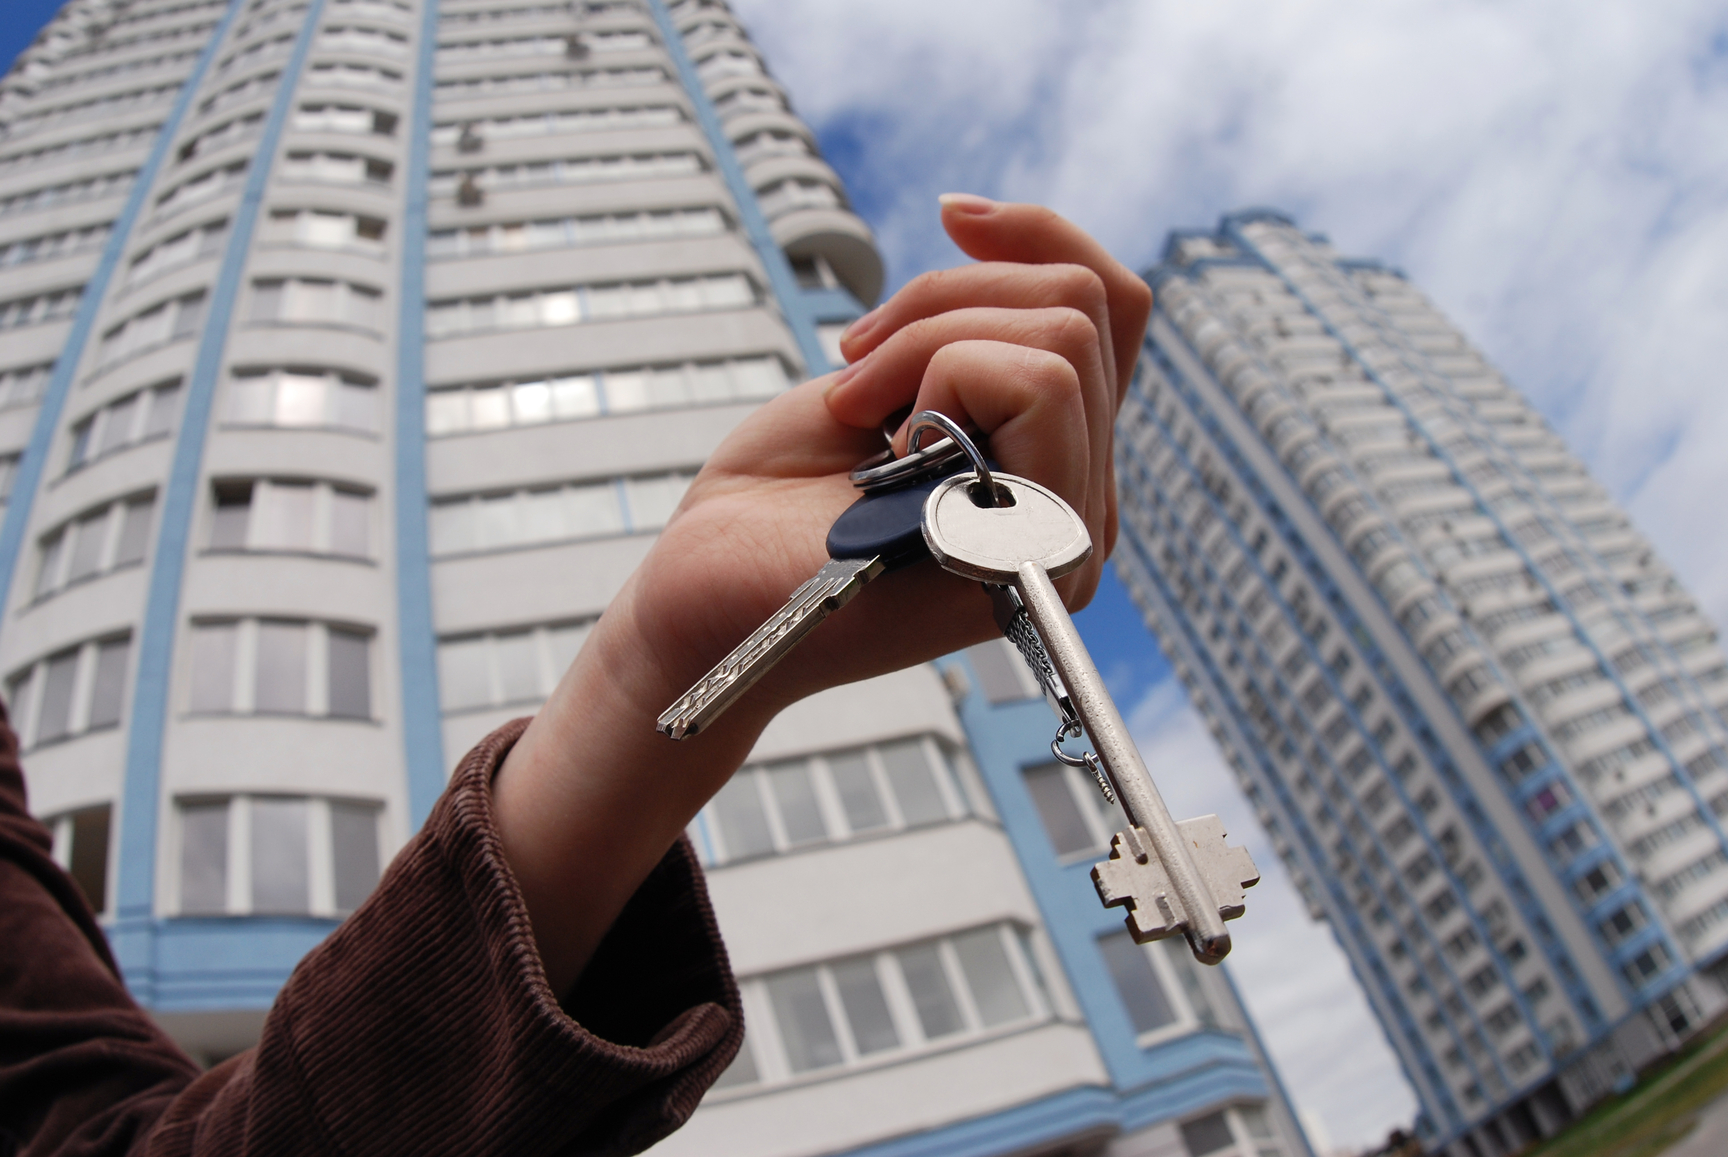 Бесплатная аренда жилья. Ключи от квартиры. Квартира ключи. Ключи от квартиры в руке. Ключи от новой квартиры.